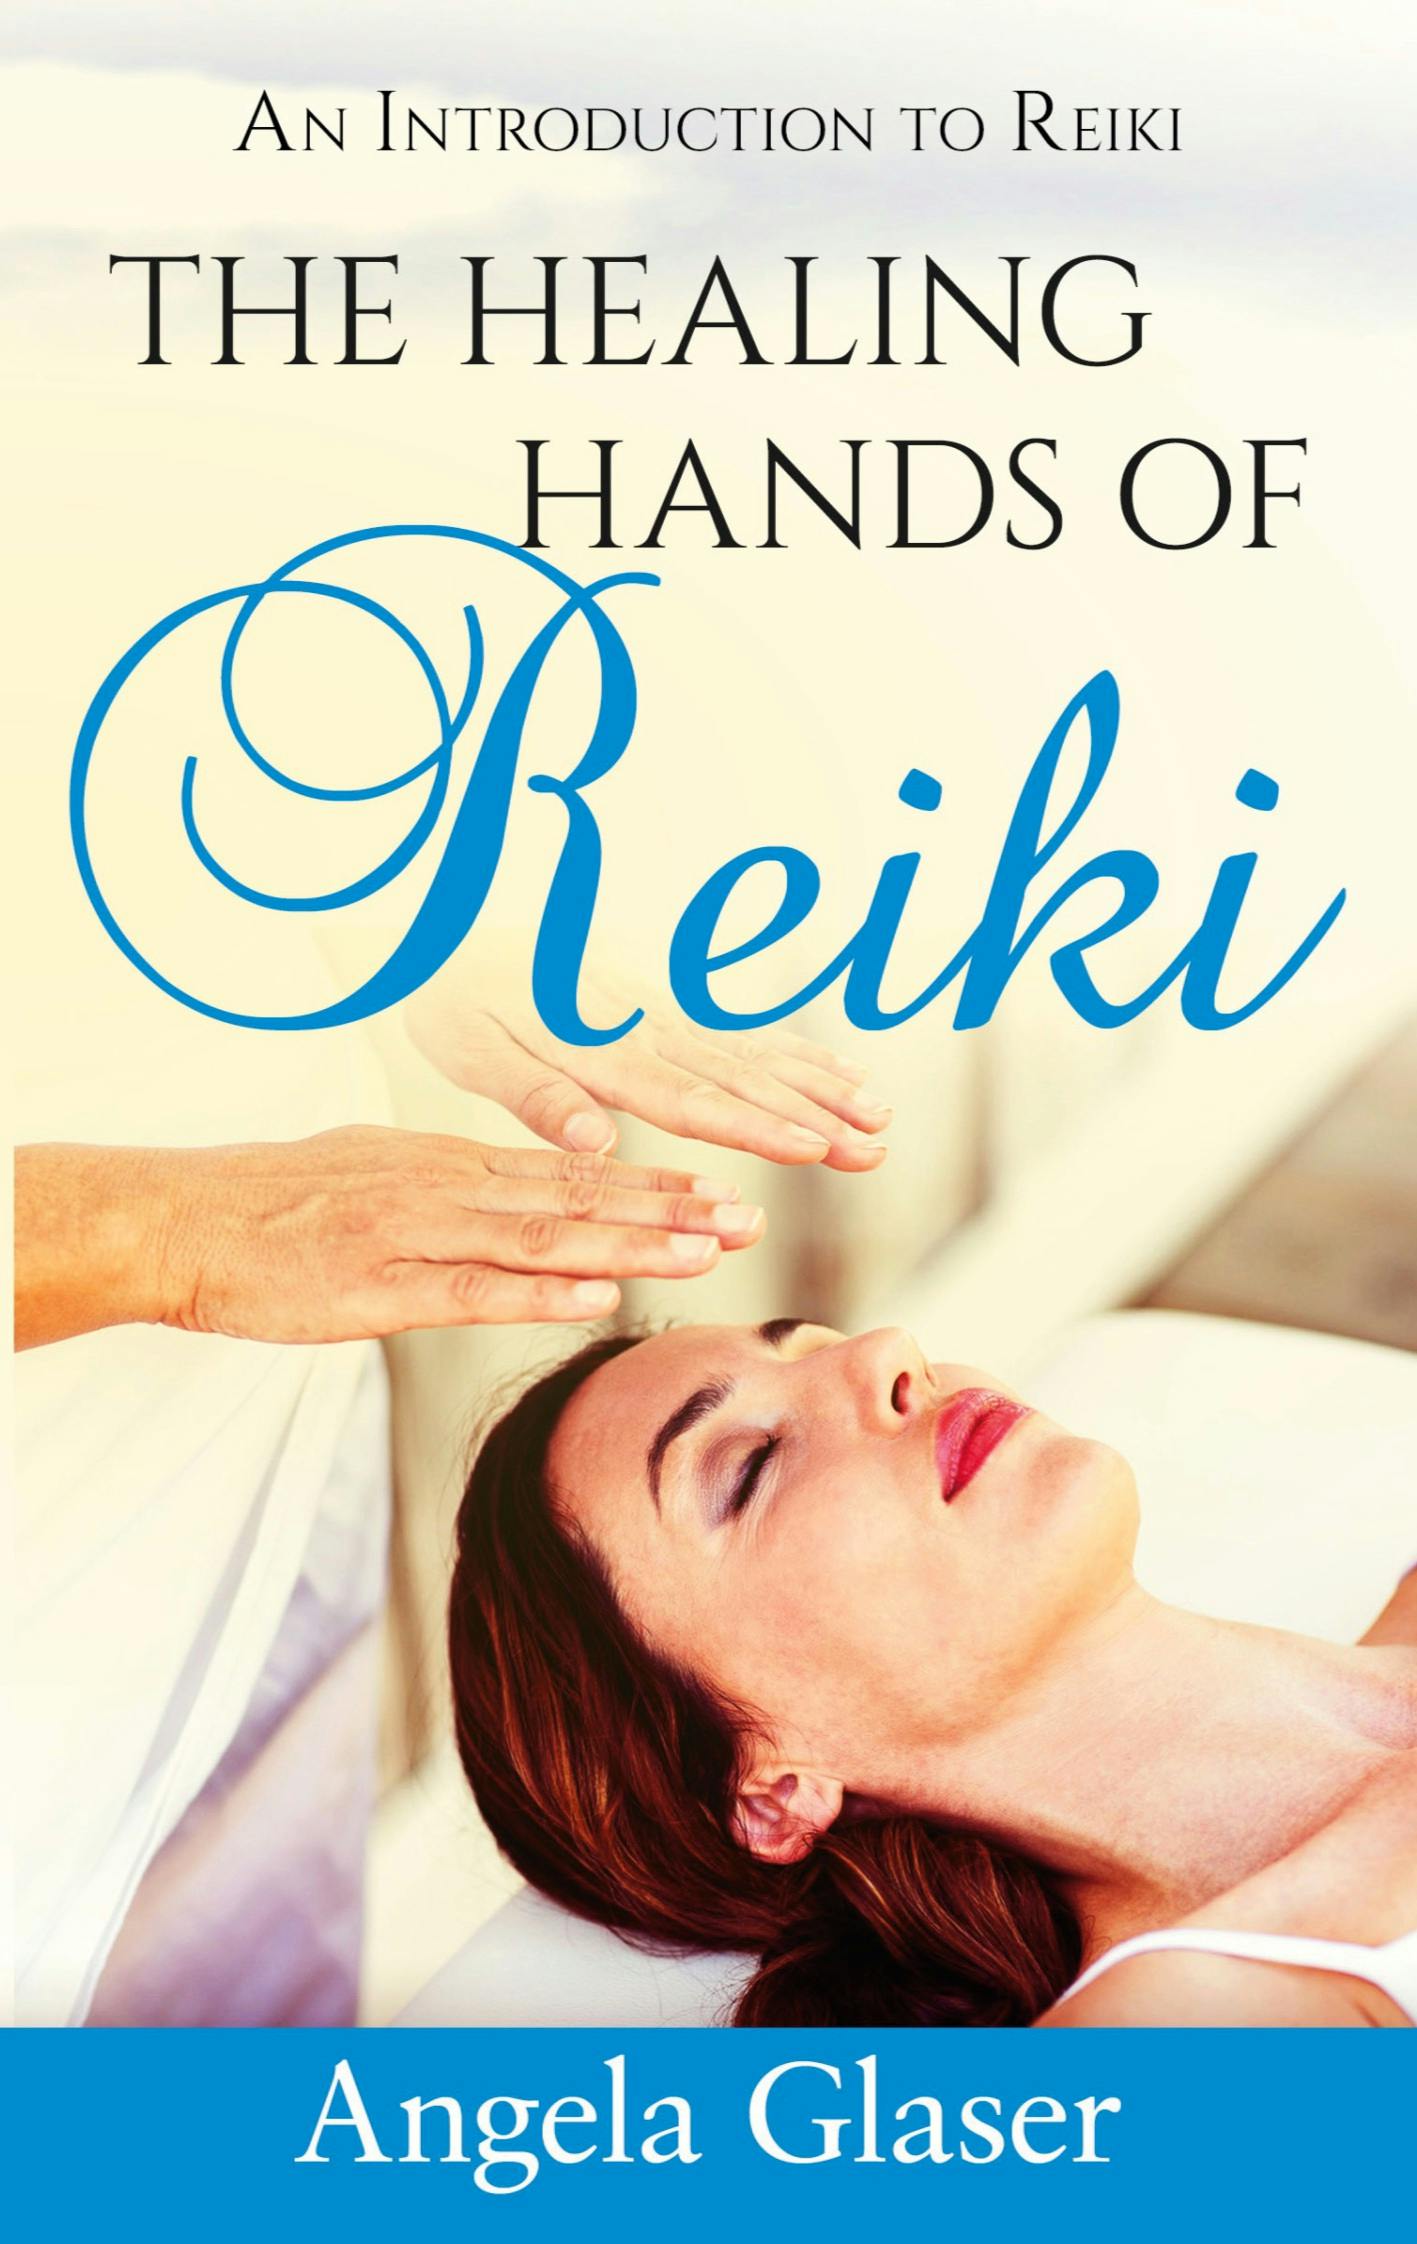 The Healing Hands of Reiki - Angela Glaser